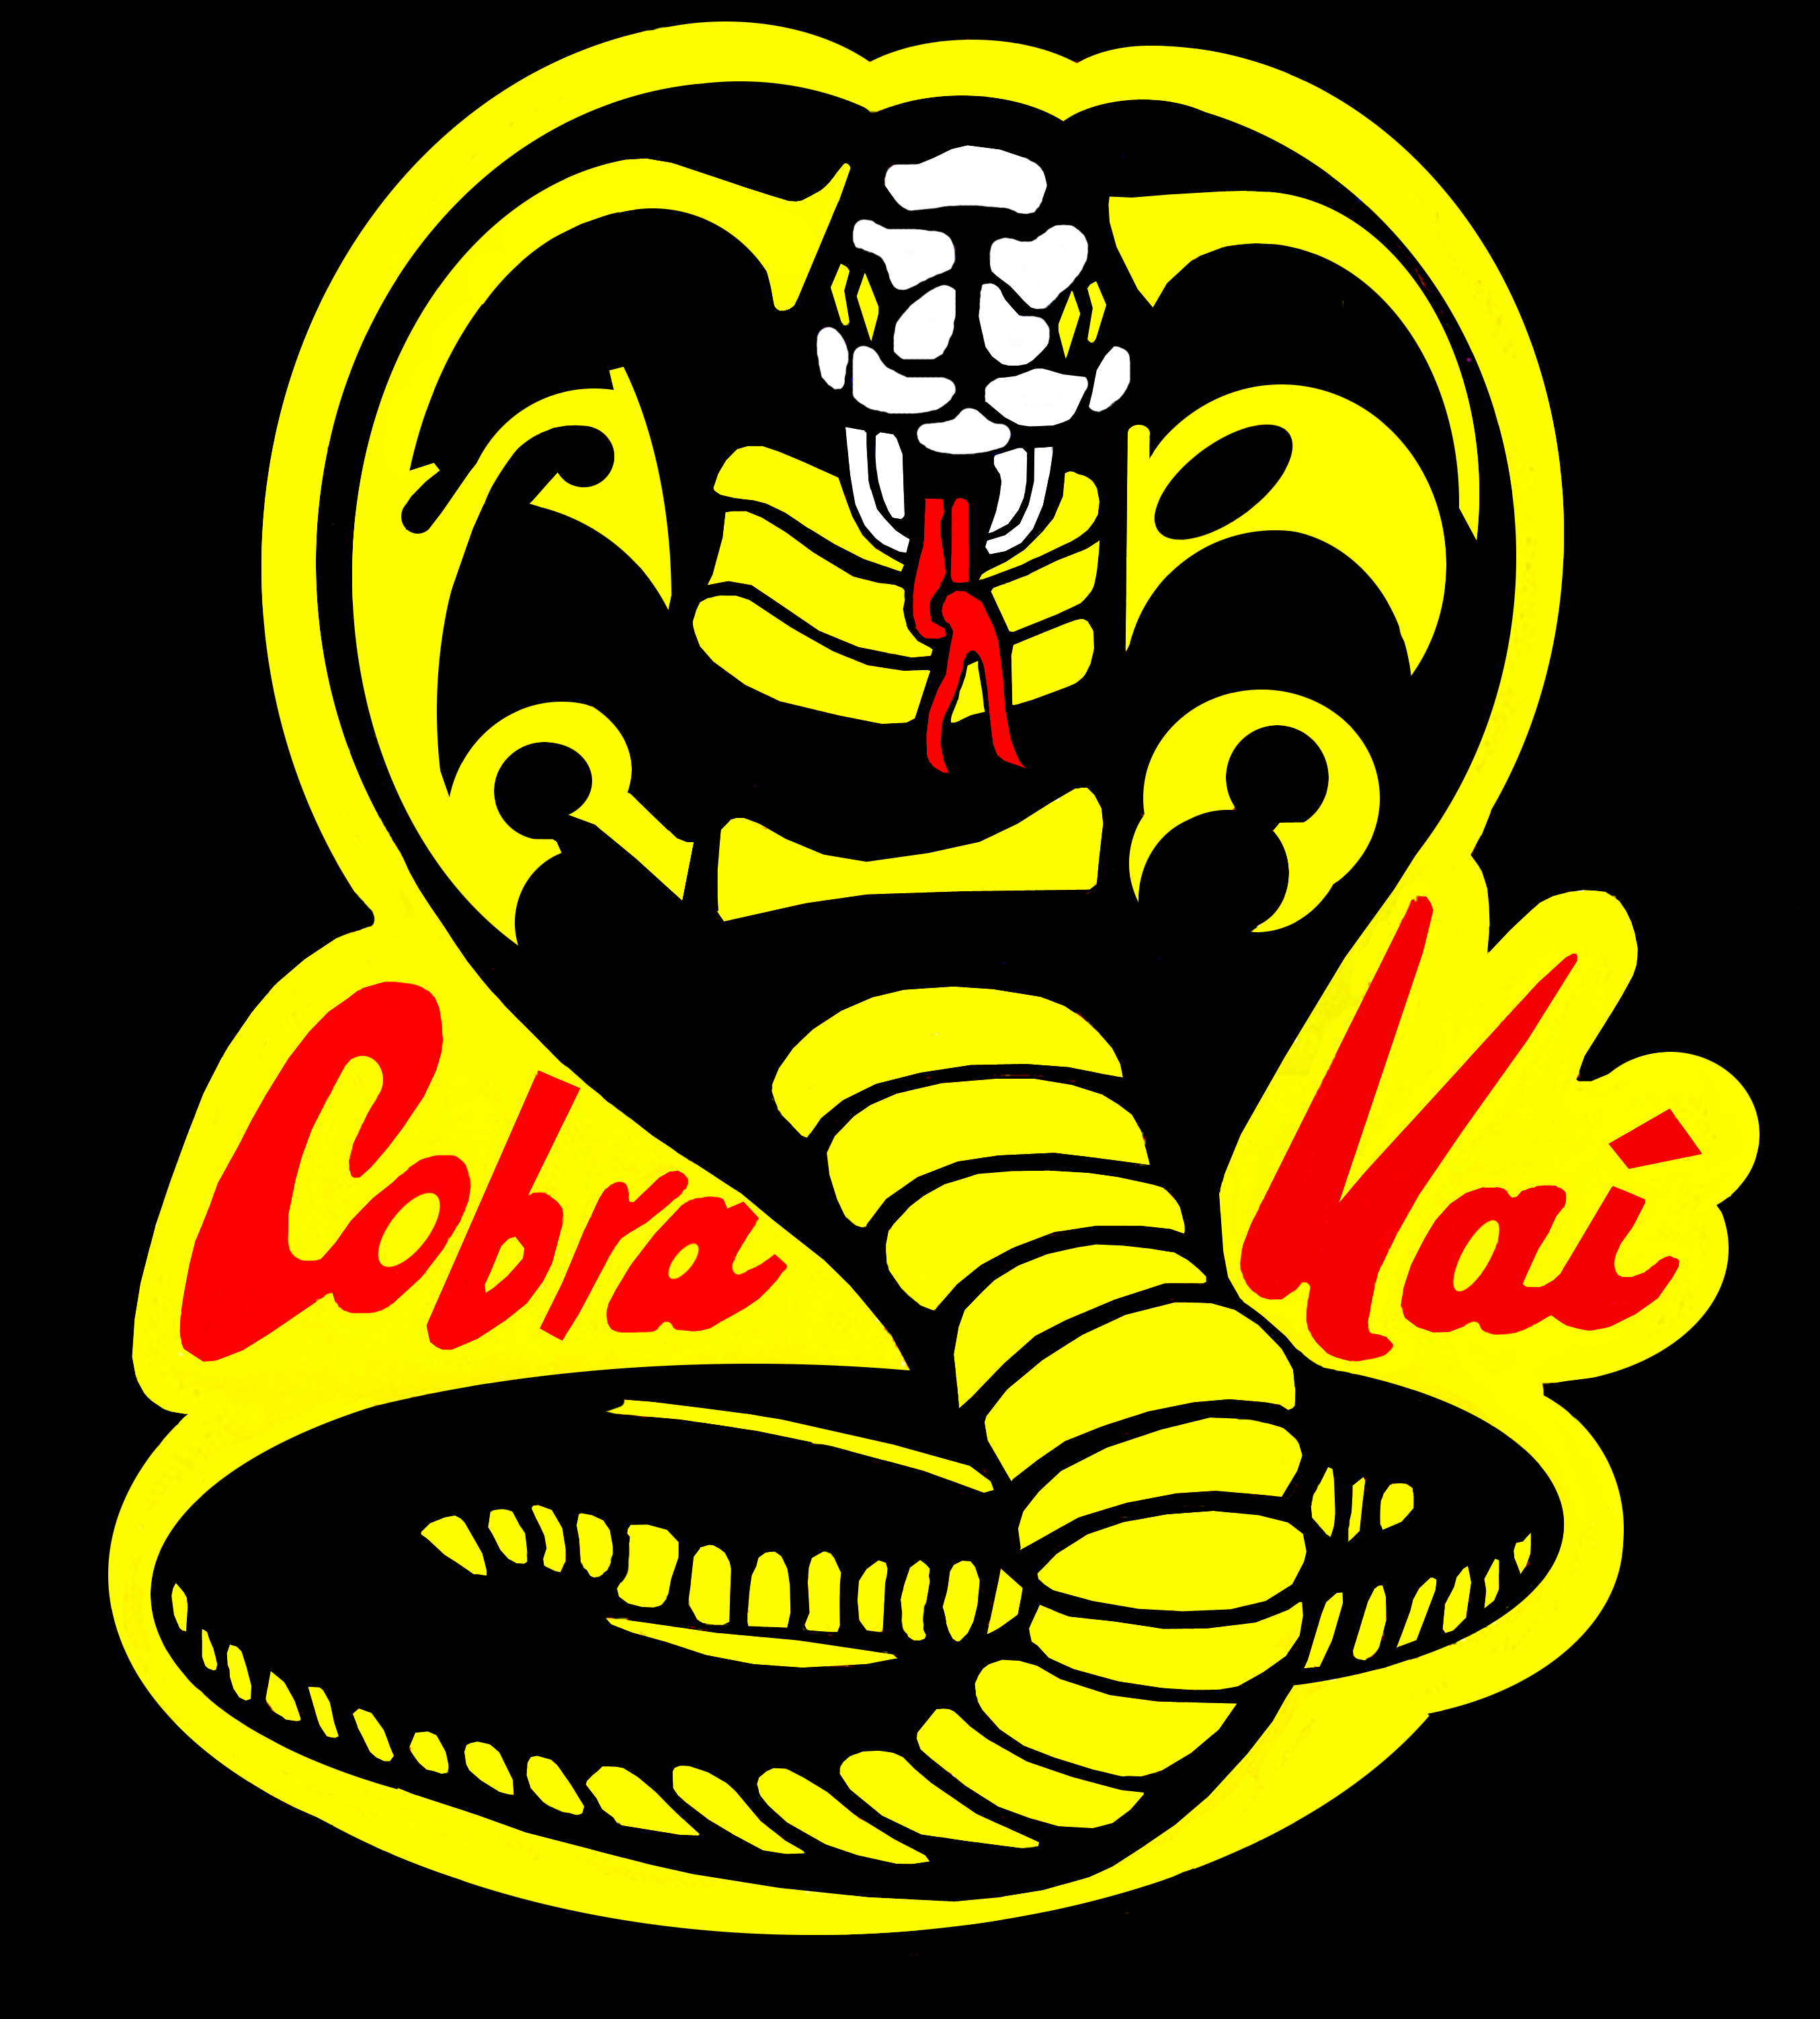 Cobra Kai Page Waka drawing free image download